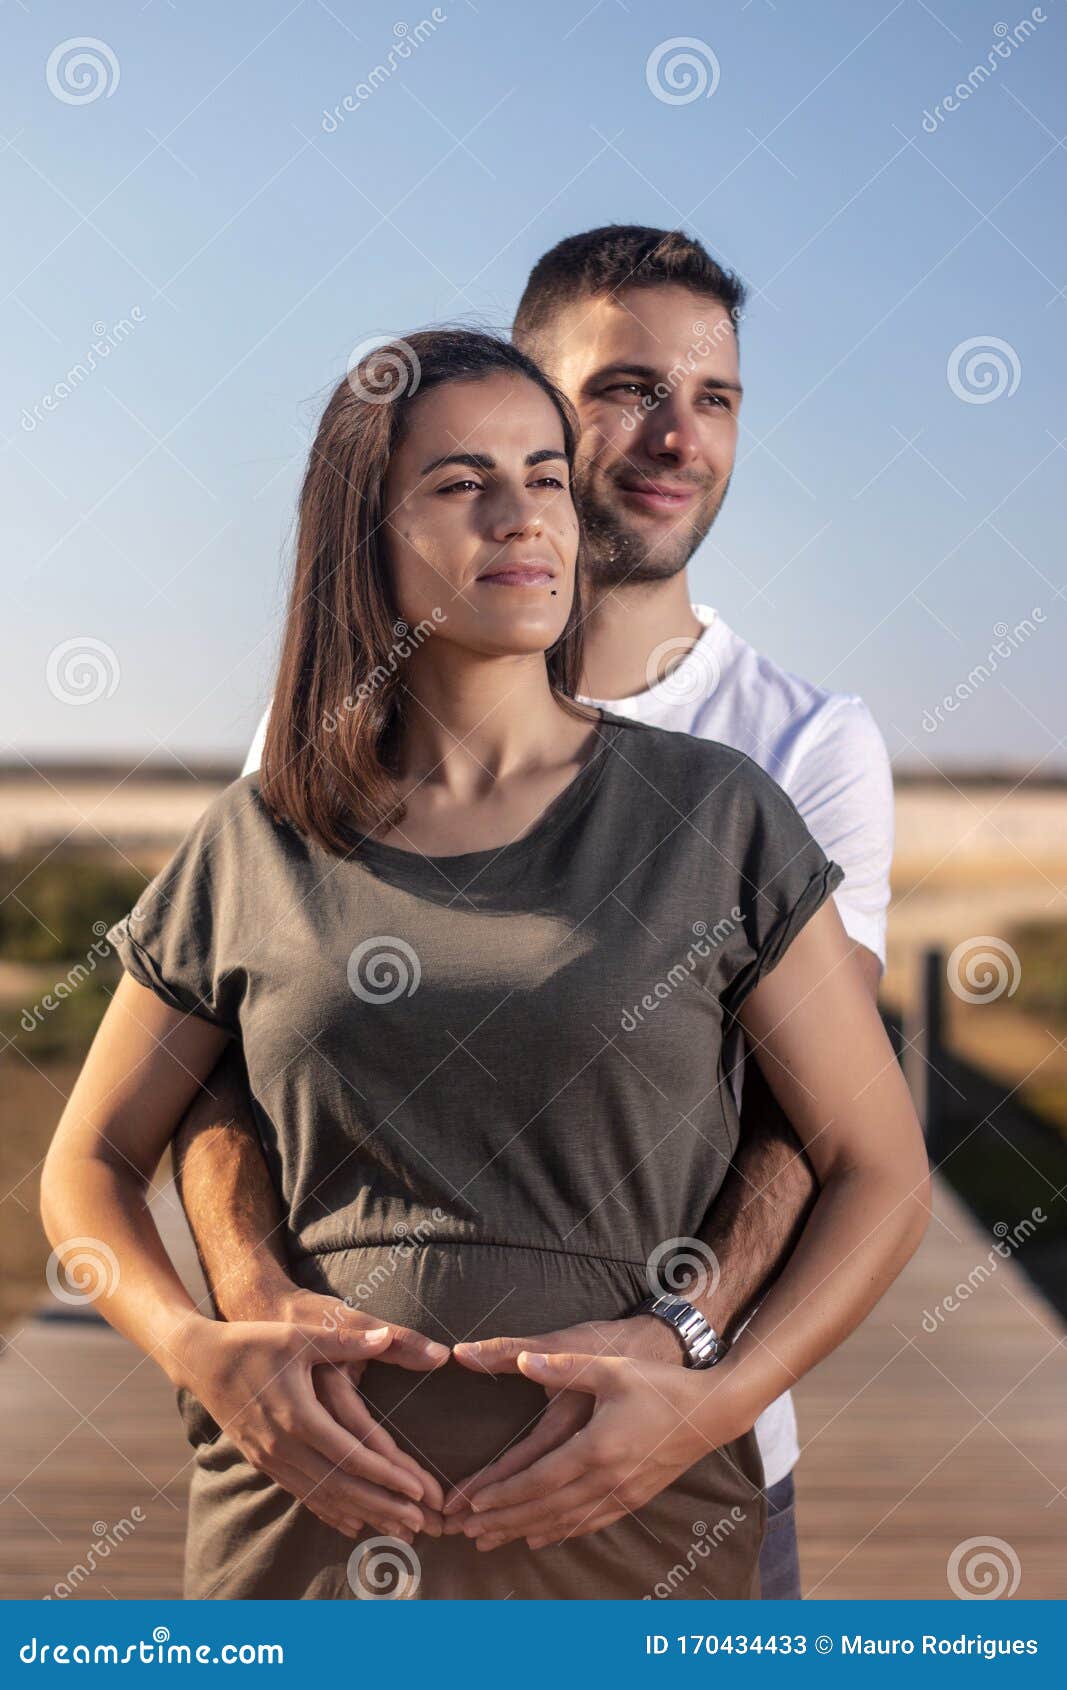 Couples sunset beach pose idea 🔆🌴 #couplesposeideas #couplespose #po... |  TikTok